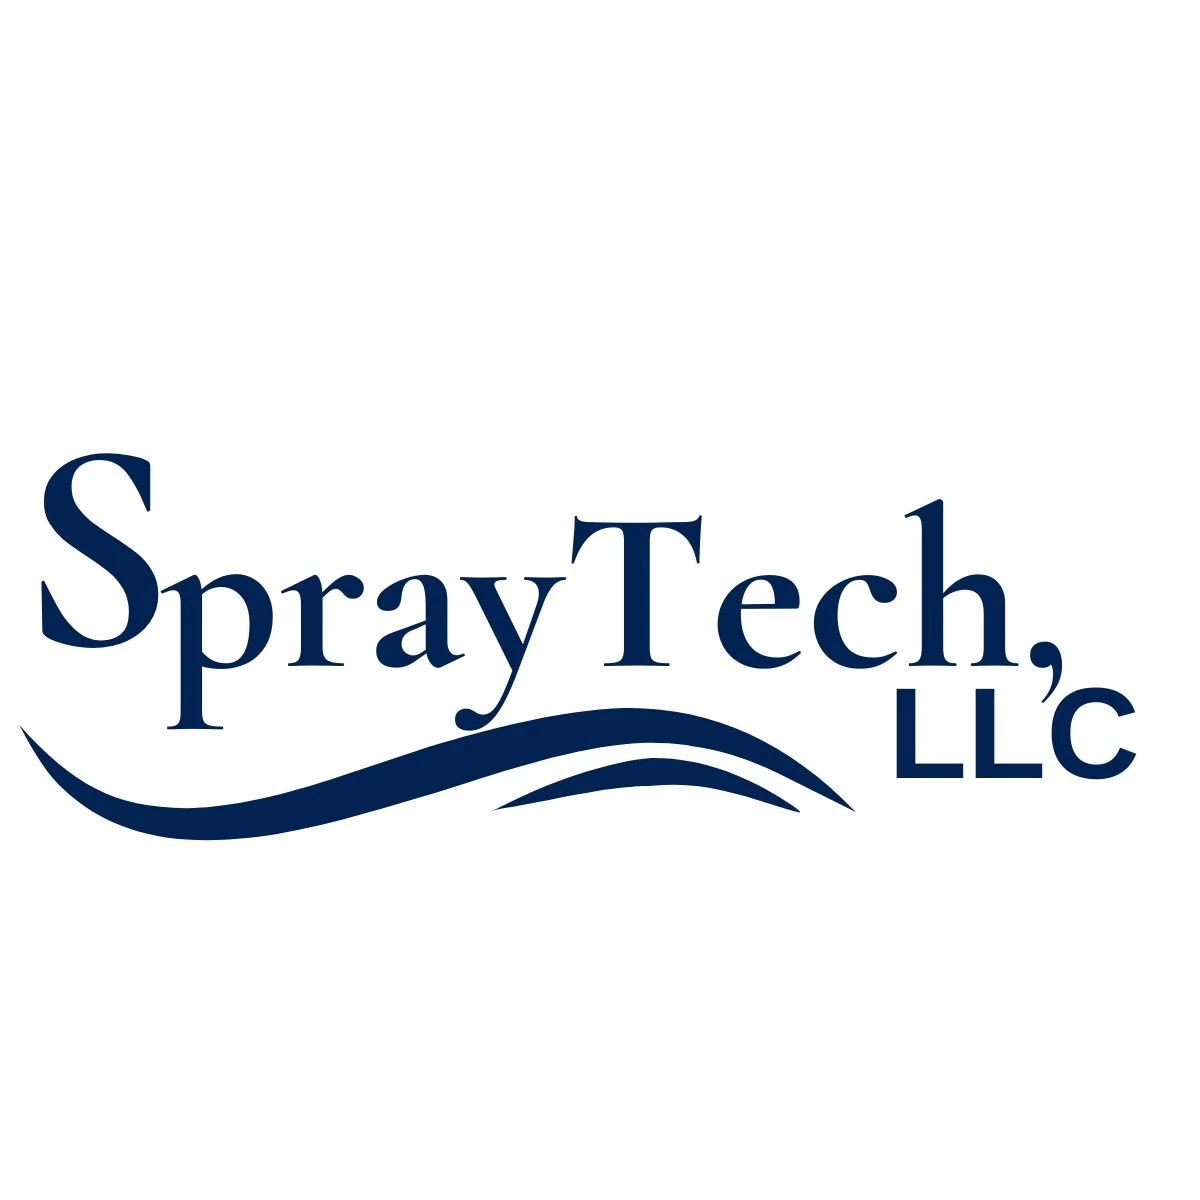 SprayTech, LLC